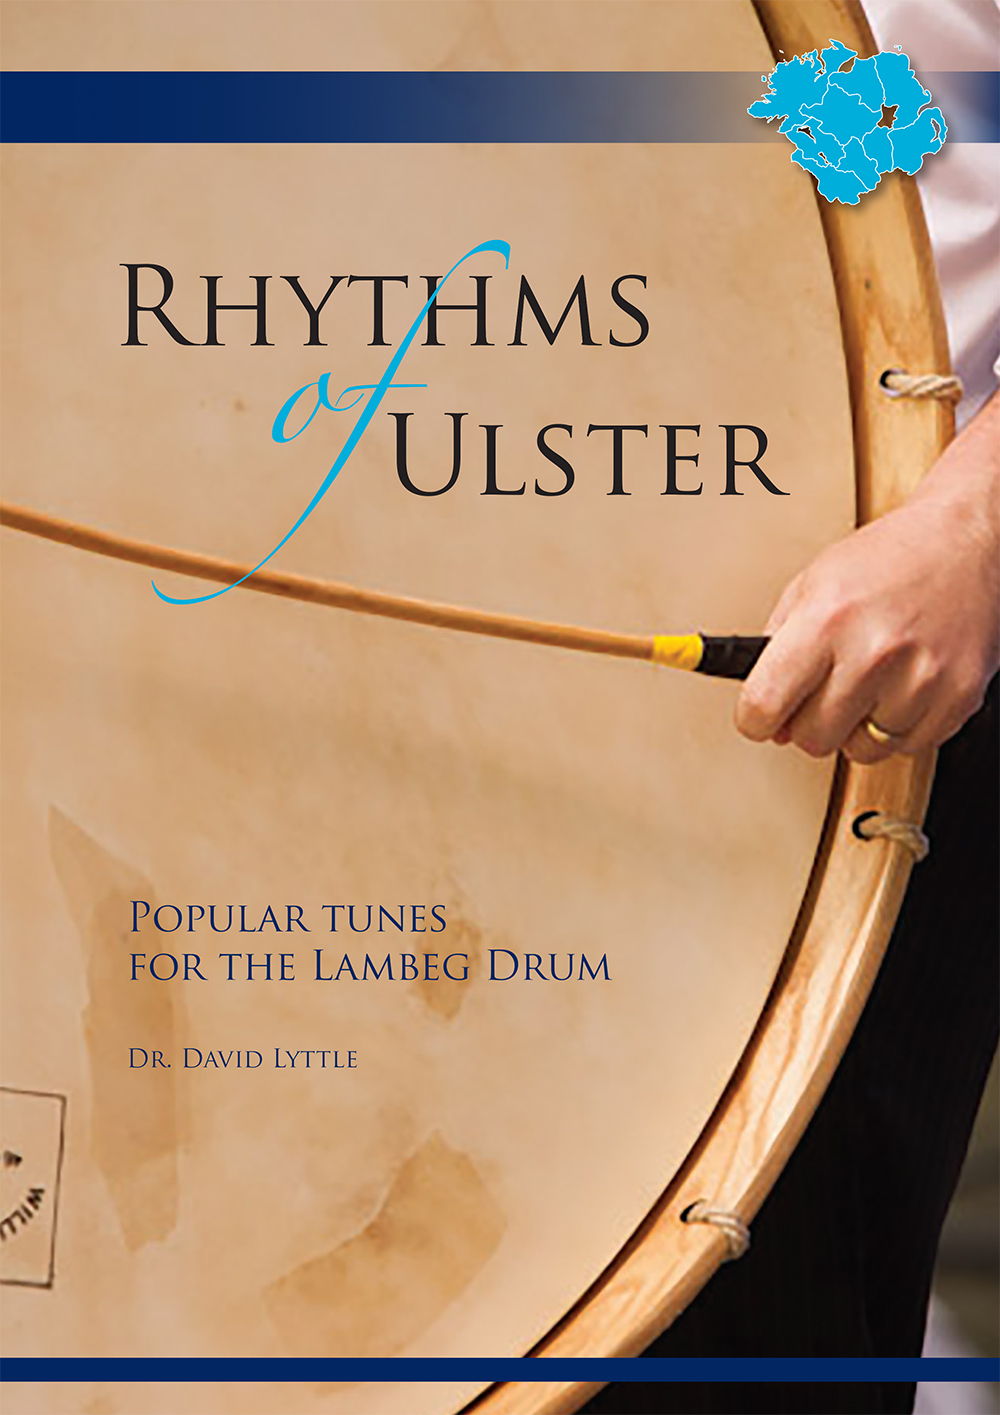 Rhythms of Ulster